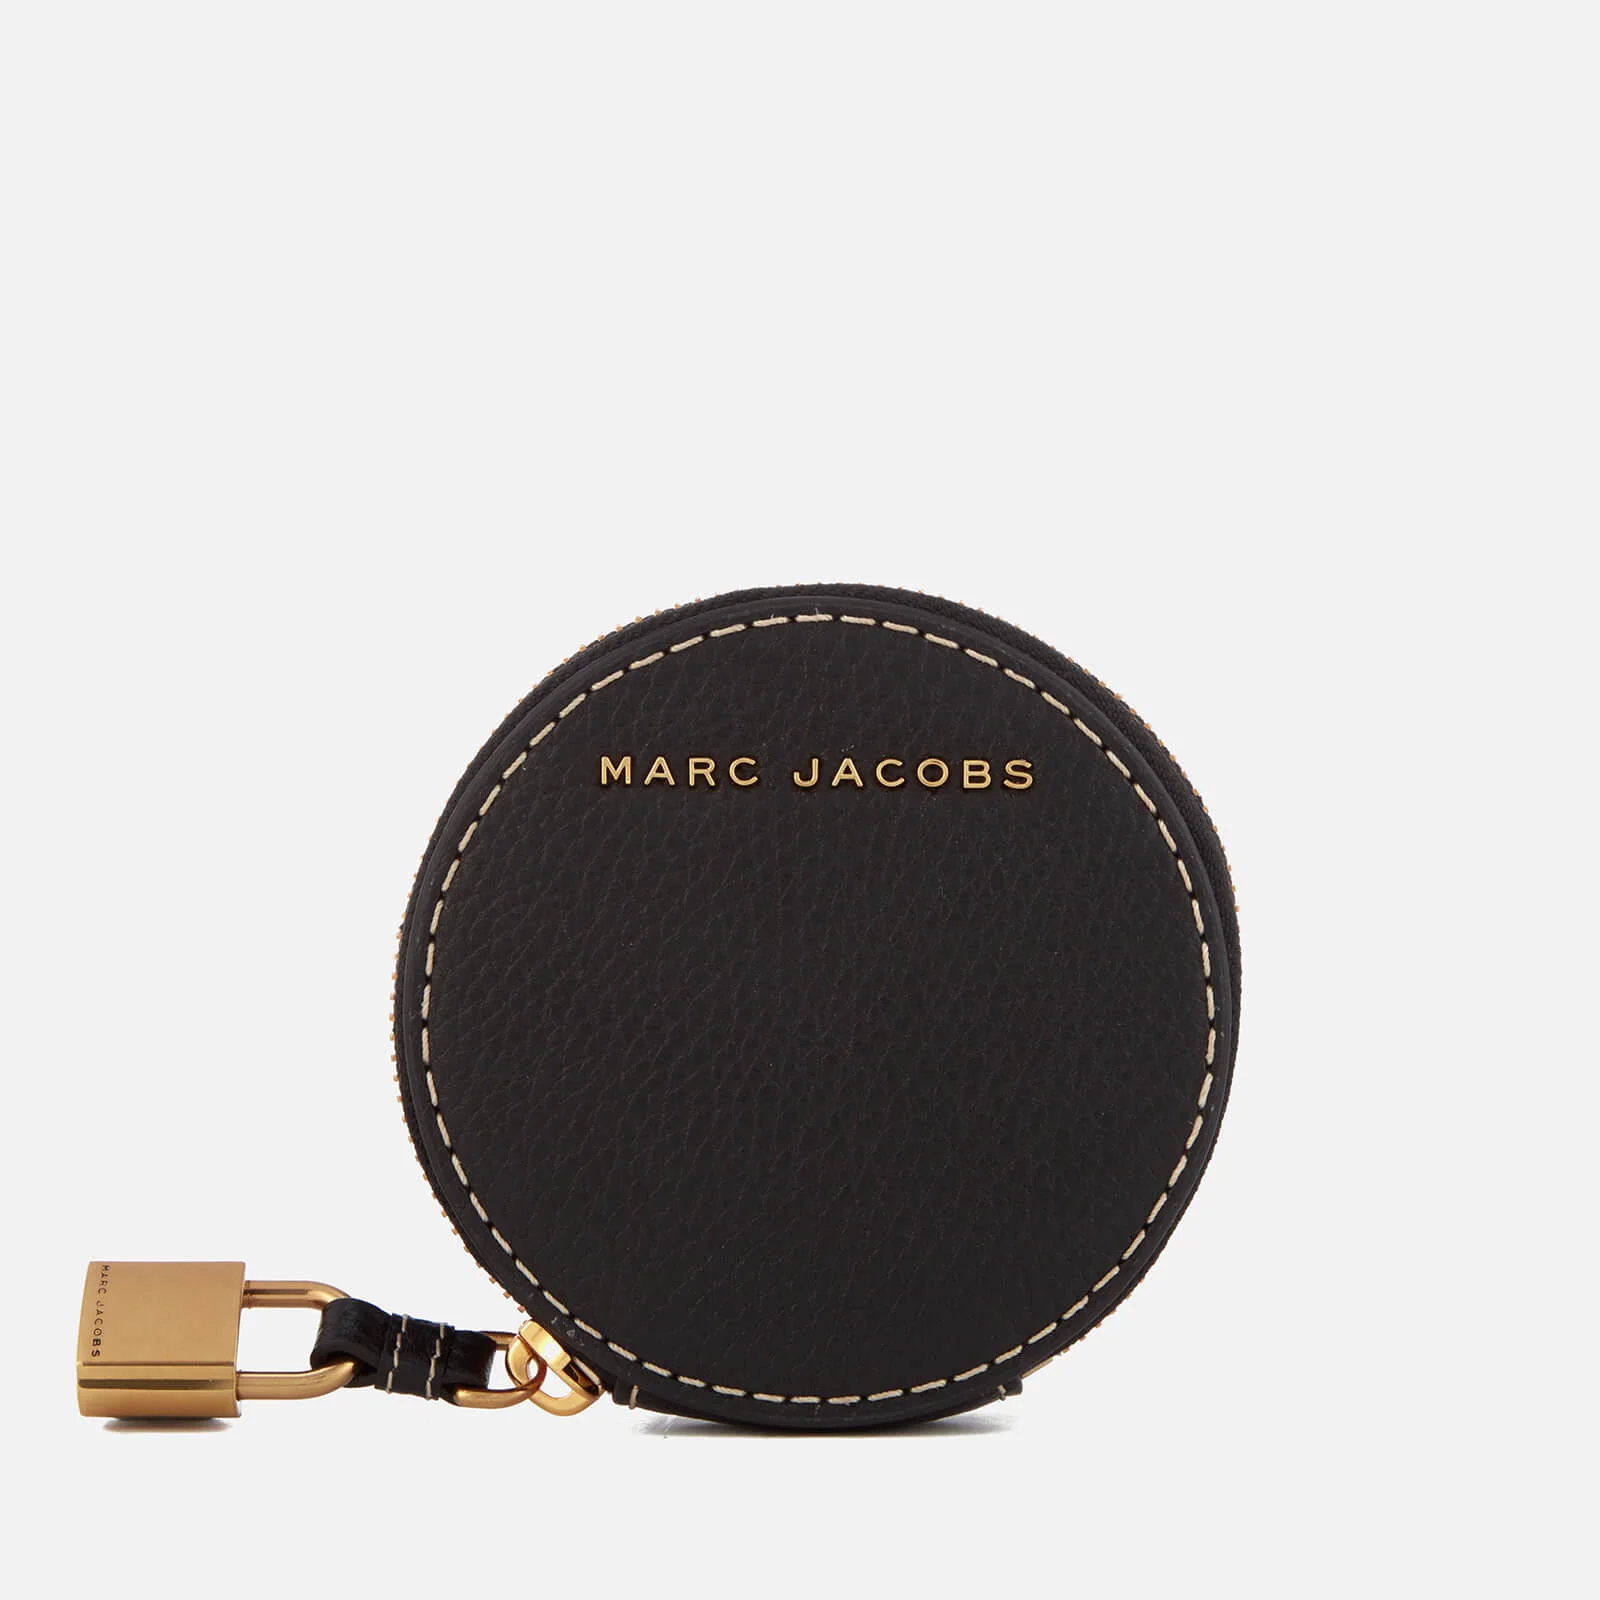 Marc Jacobs Women's Coin Pouch - Black Image 1